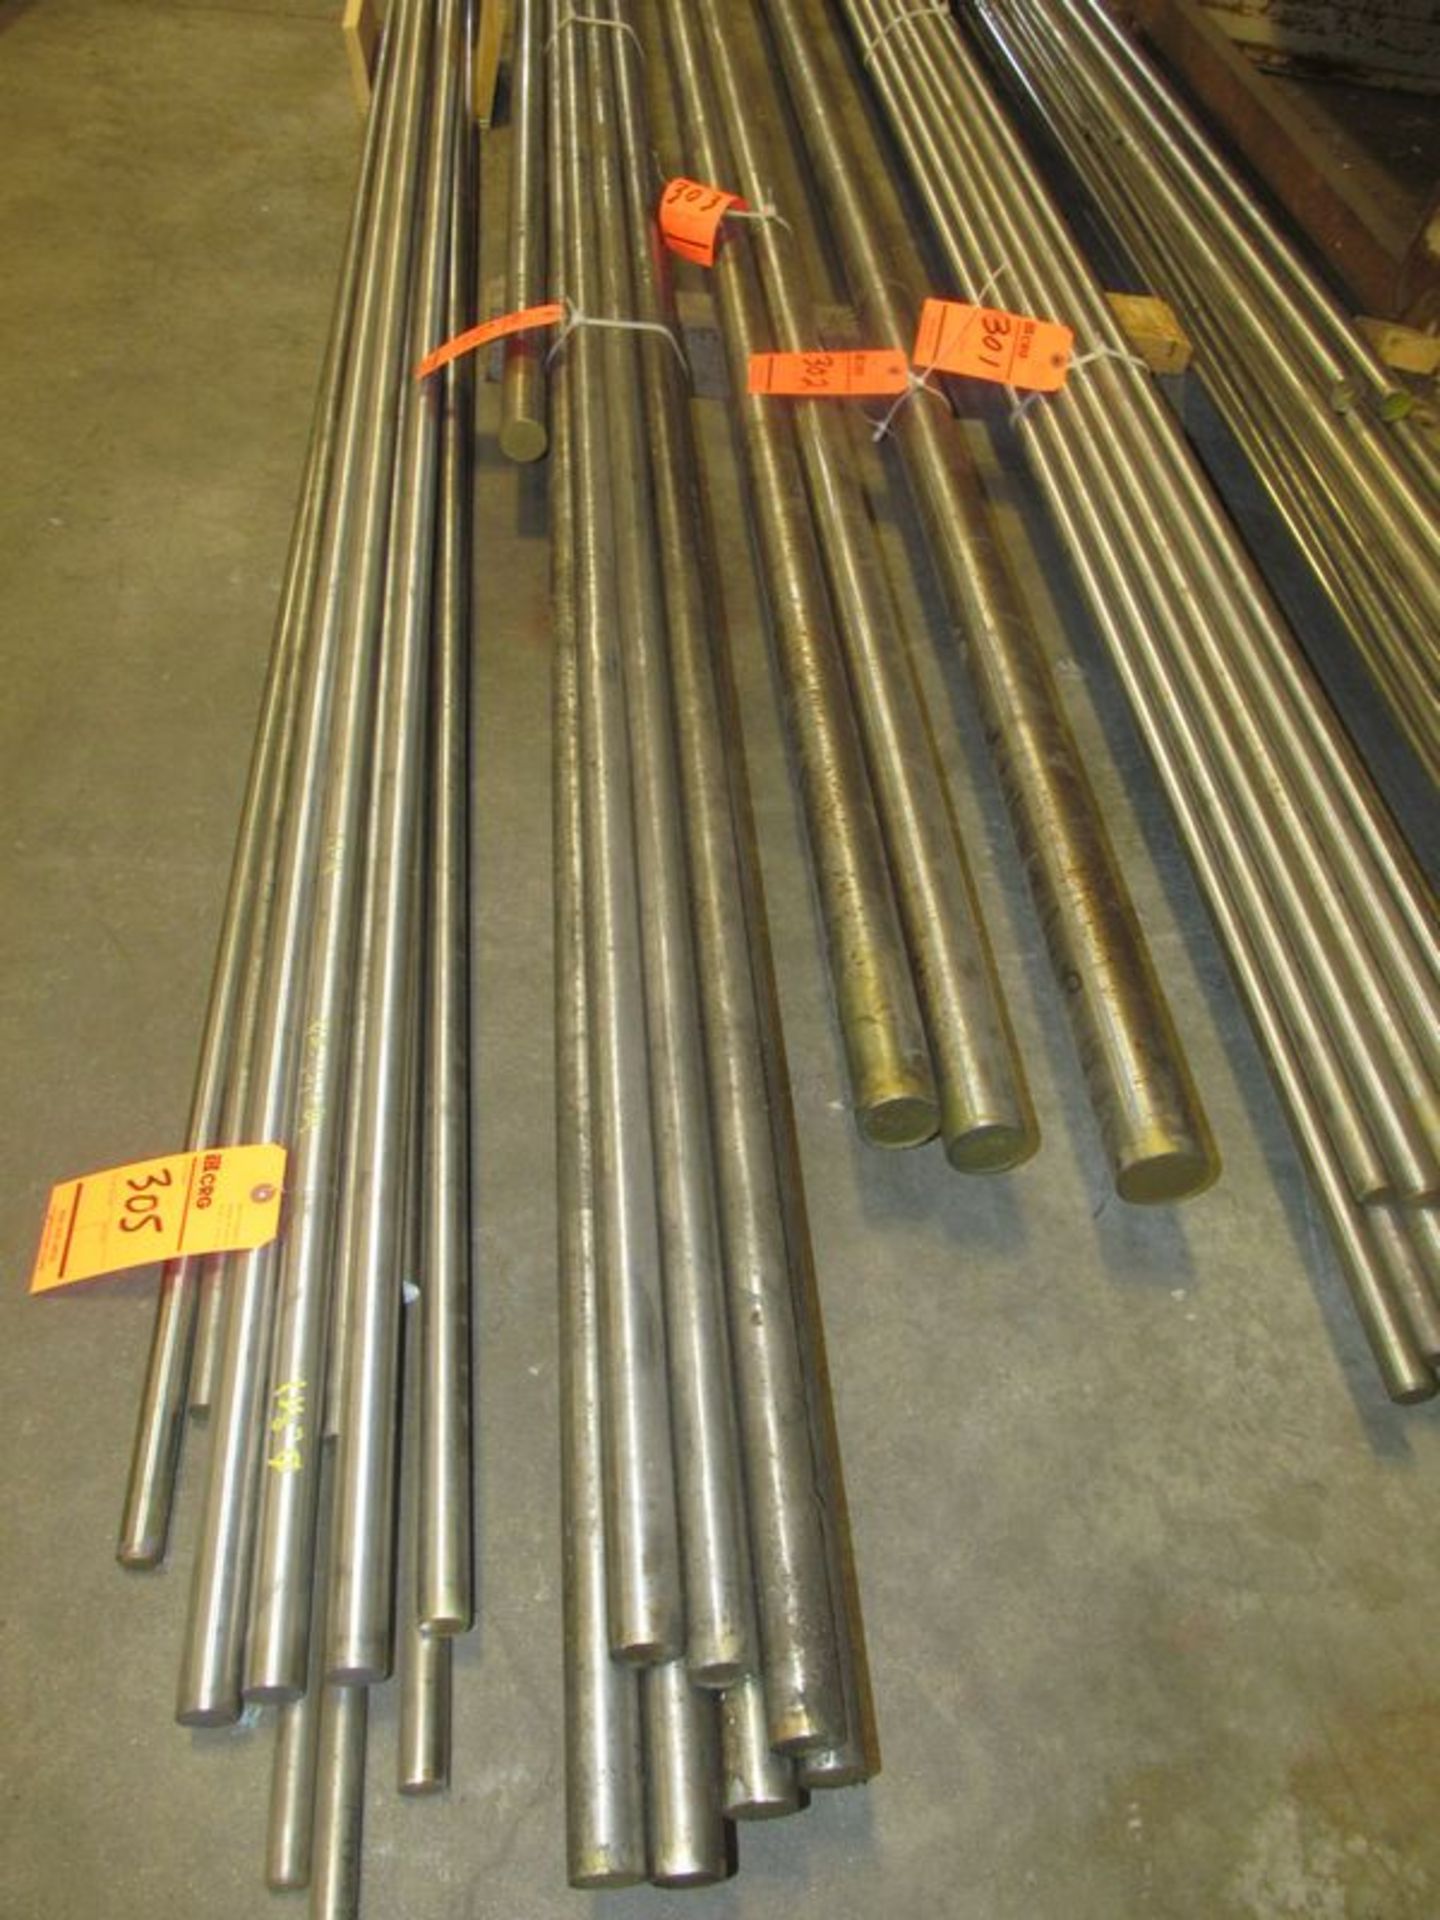 Lot of (8) pieces Stainless Steel grade 17-4, 1 15/16" diameter x length (blg 2 rack 8 floor) - Image 2 of 2